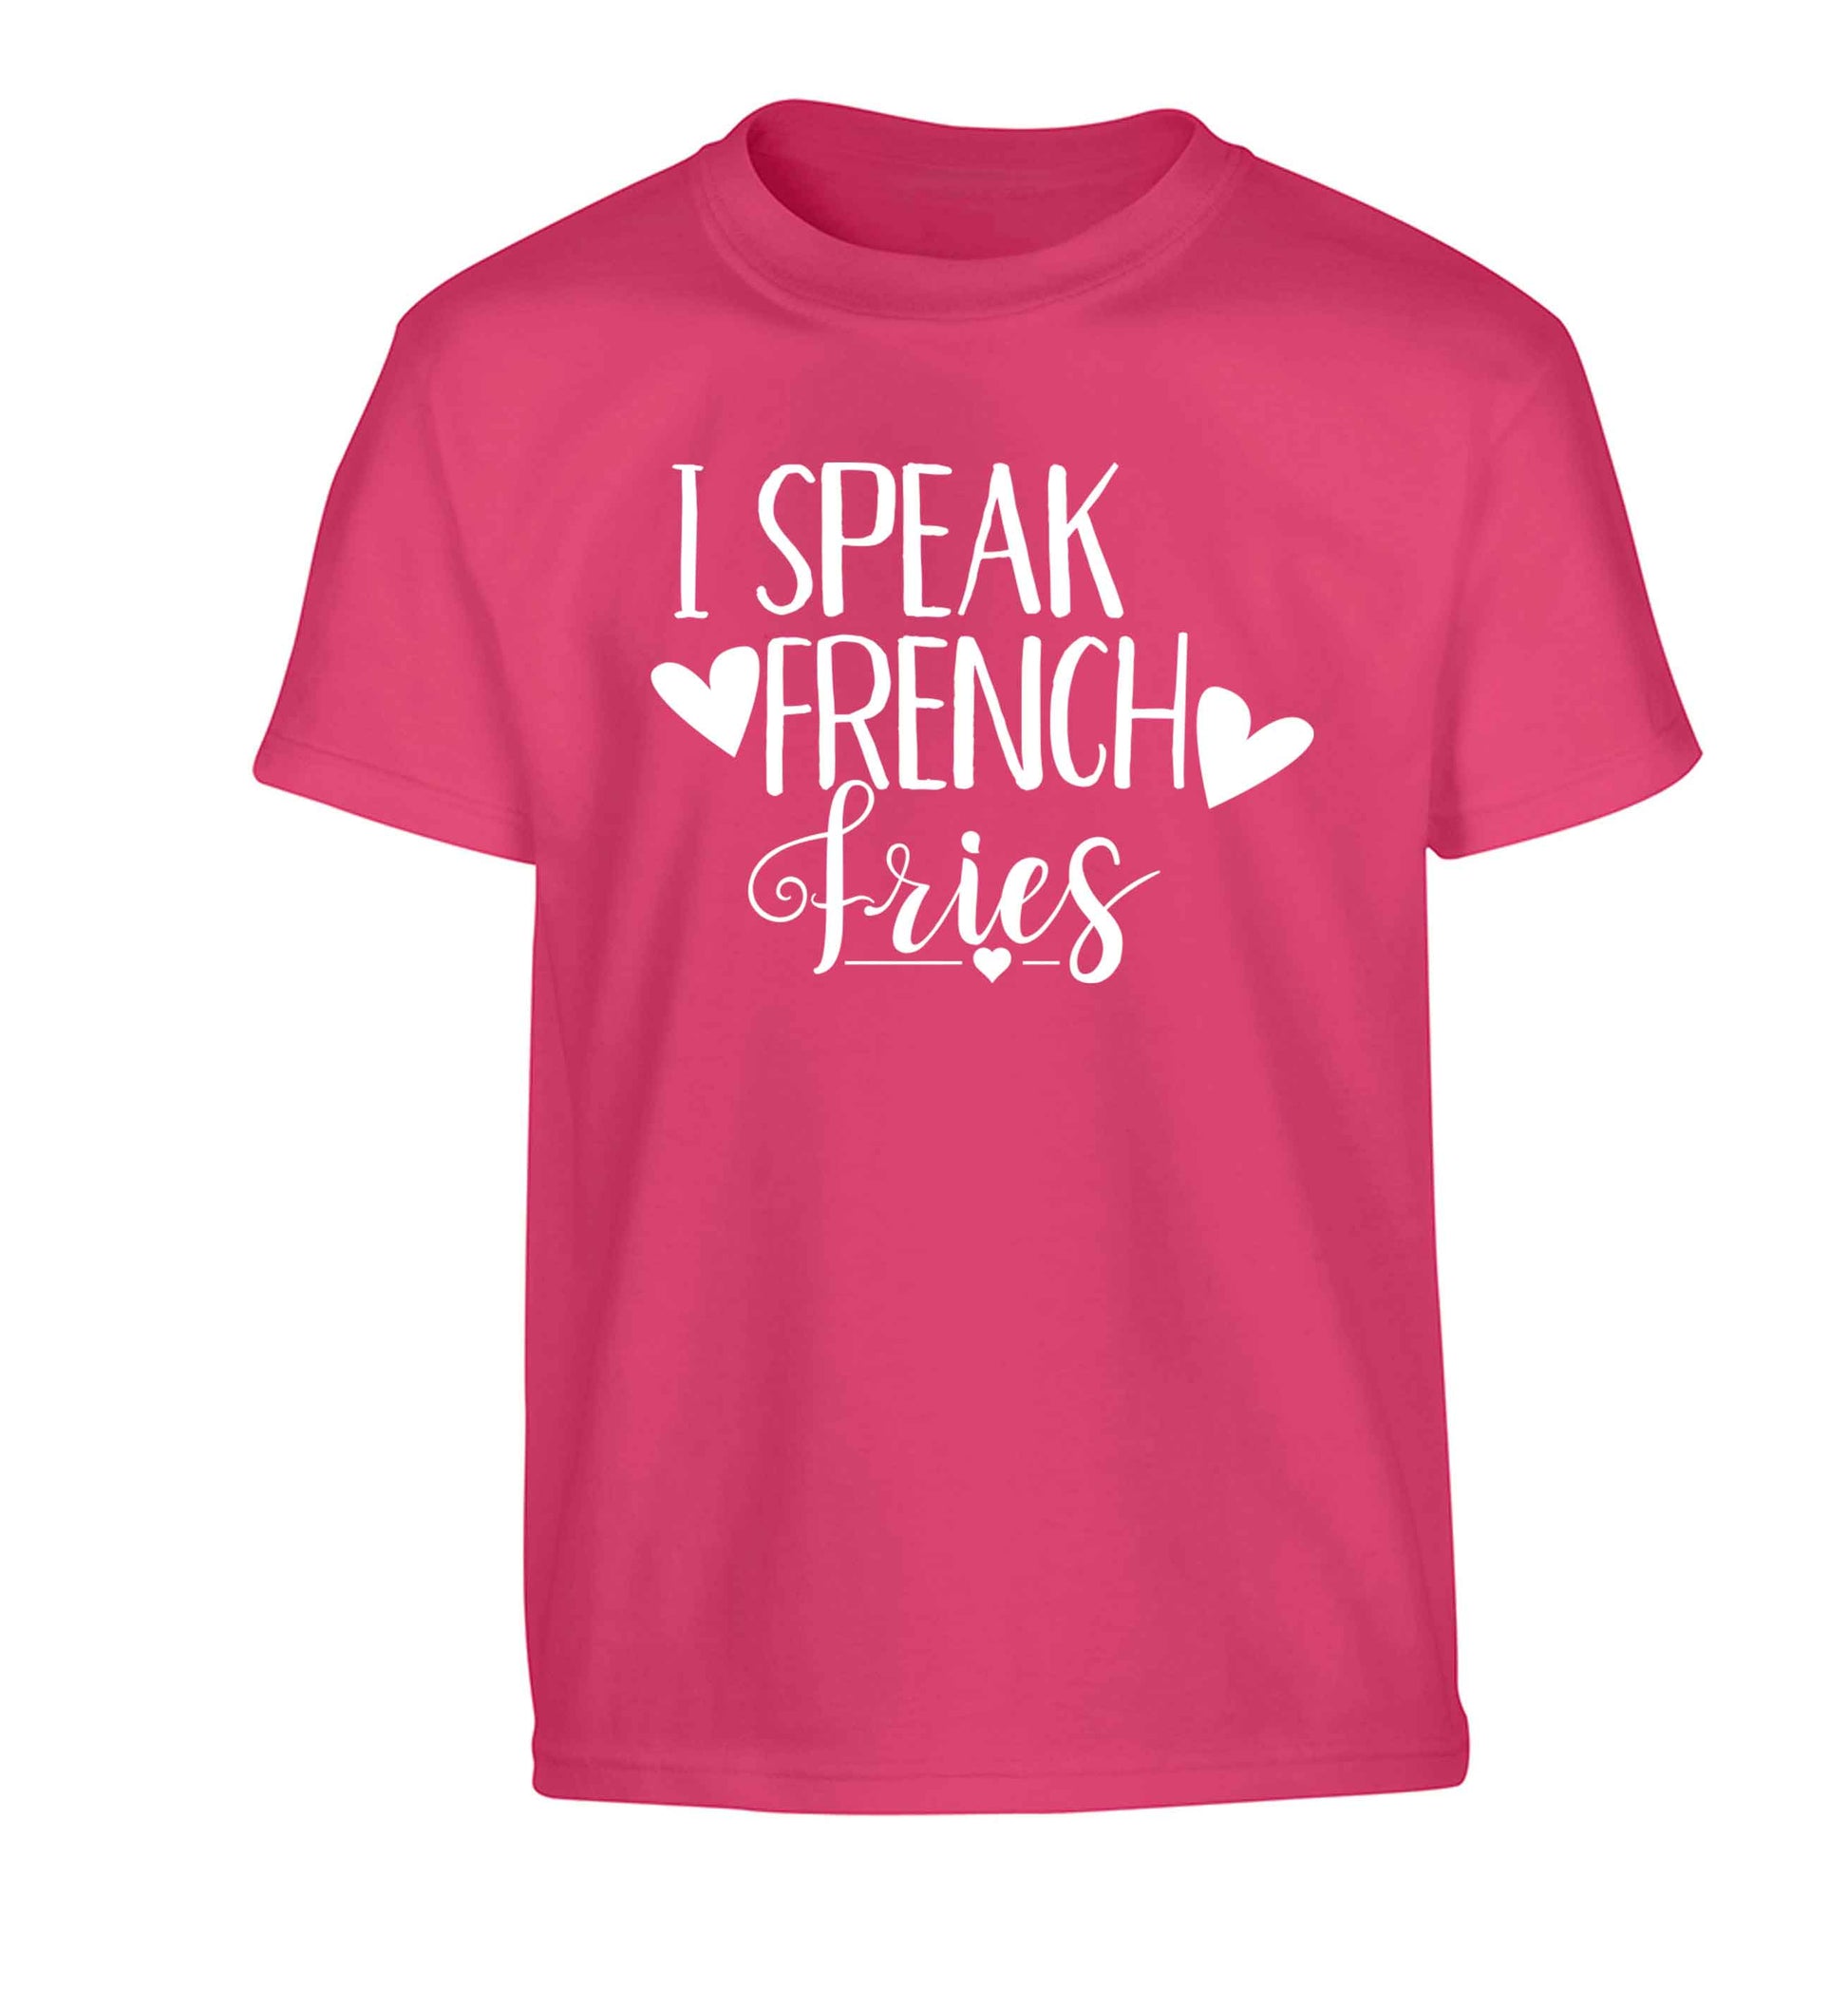 I speak French fries Children's pink Tshirt 12-13 Years